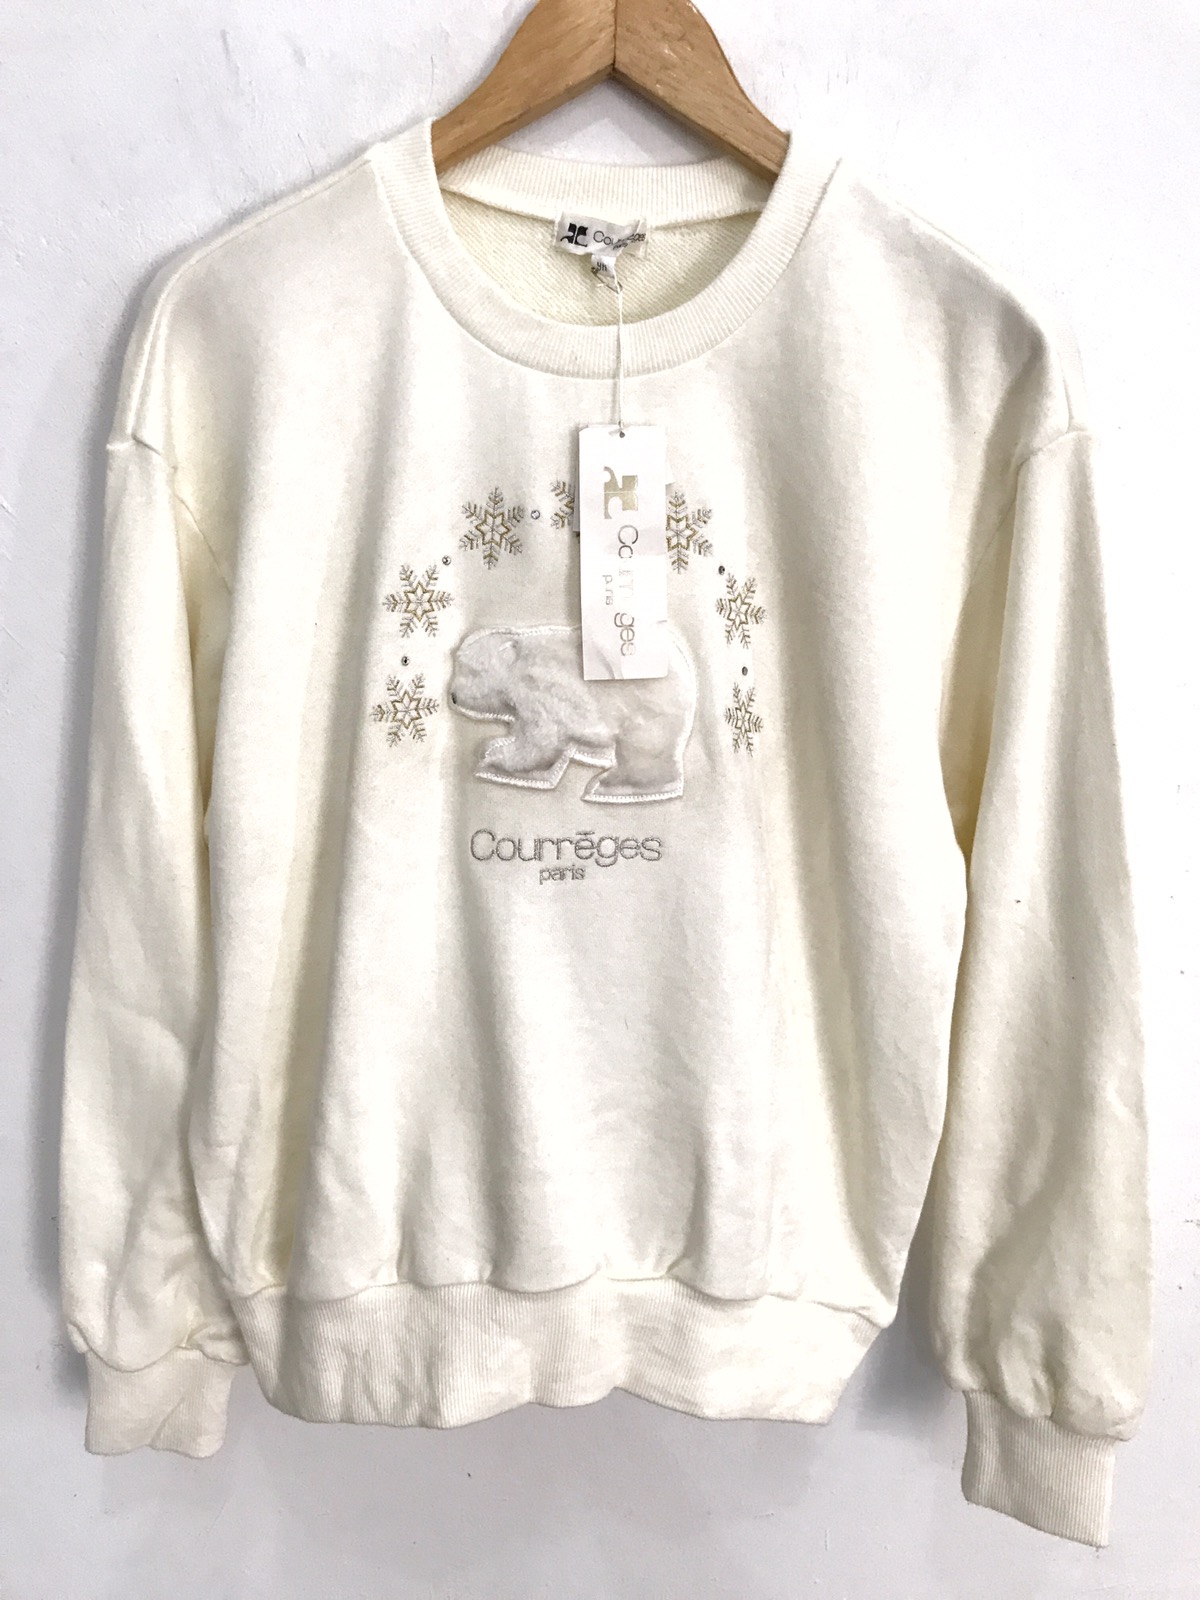 Courreges Paris Crewneck Sweatshirt With Tag Price ¥16,100 - 1